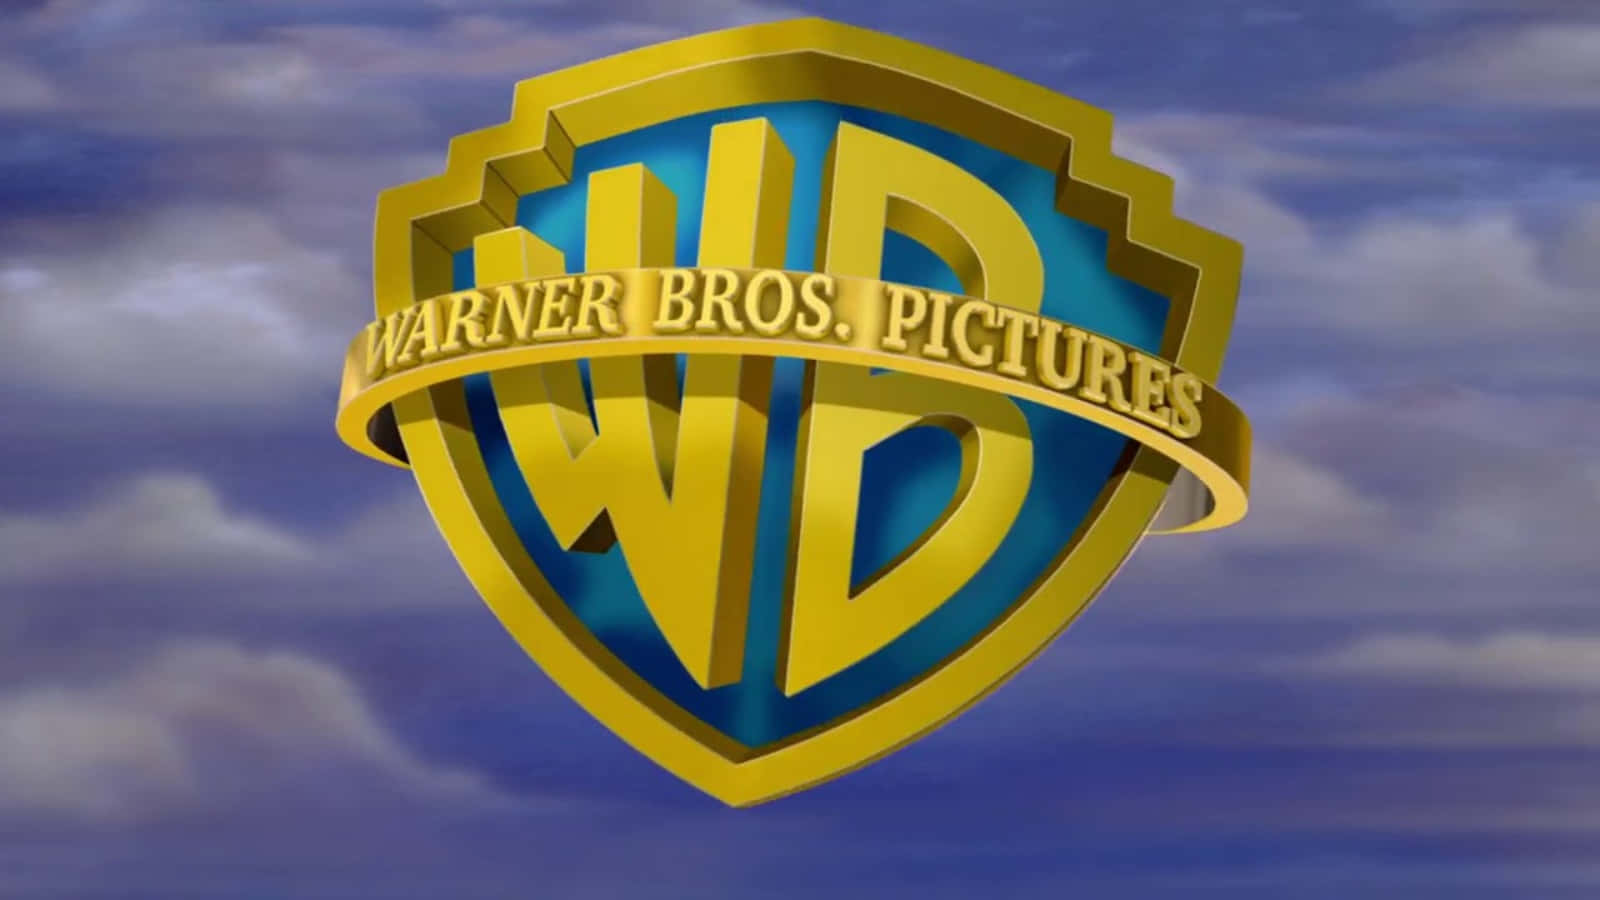 Old Warner Bros Picture